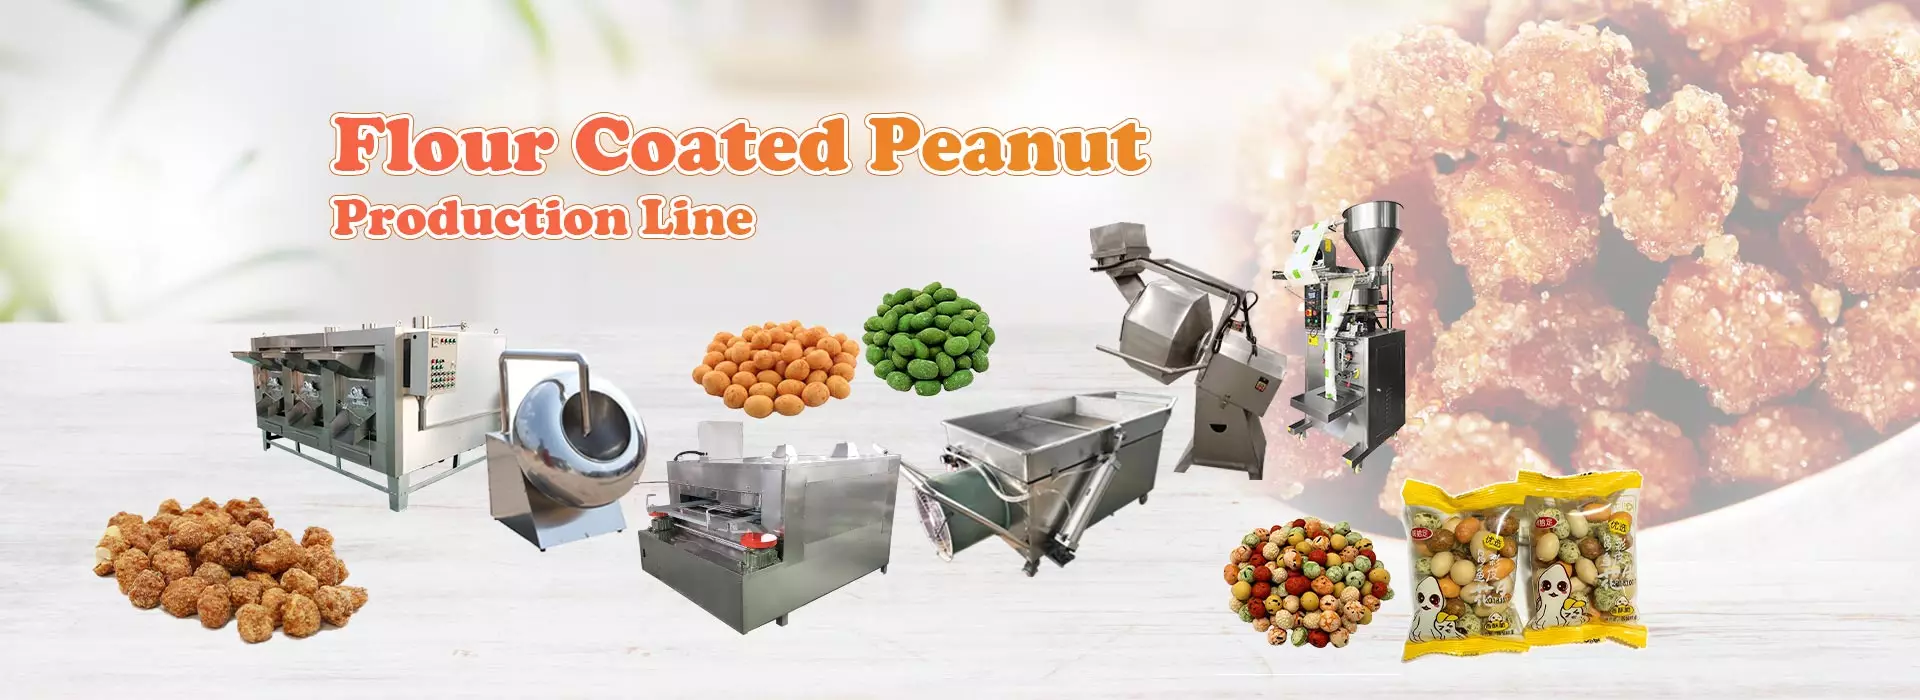 flour coated peanut production line-banner